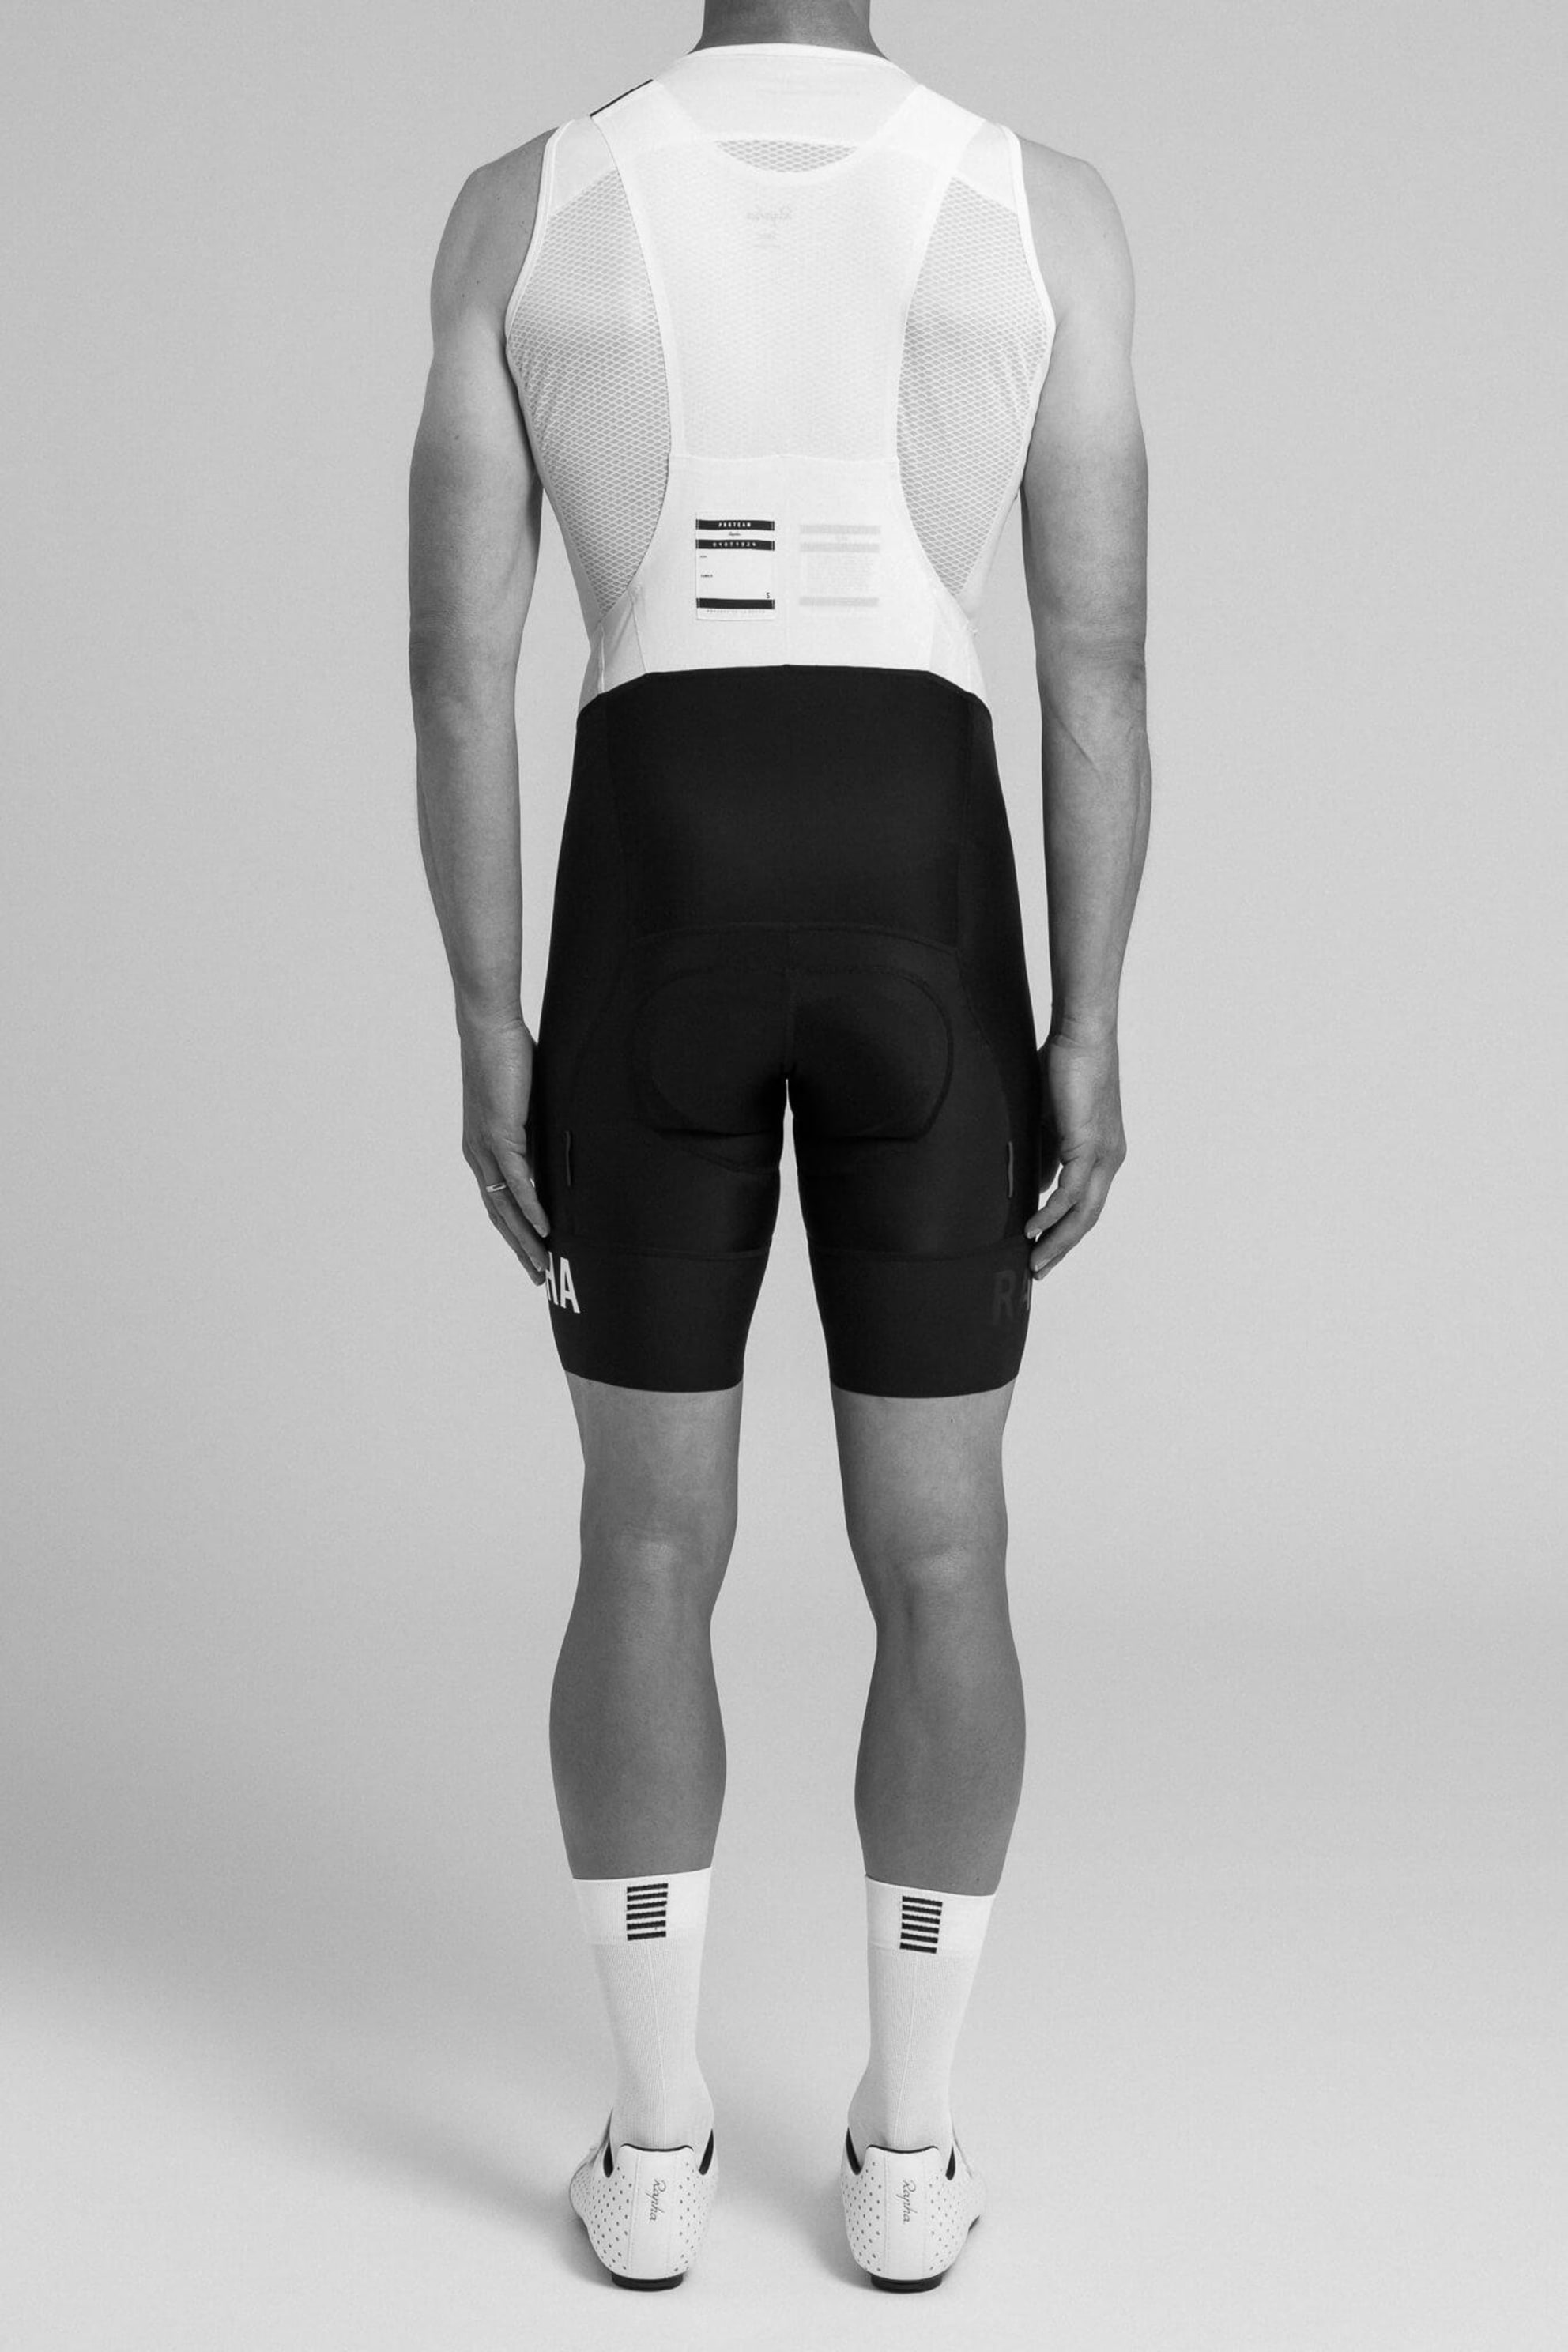 Men's Classic Bib Shorts II | Cycling Bib Shorts | Rapha